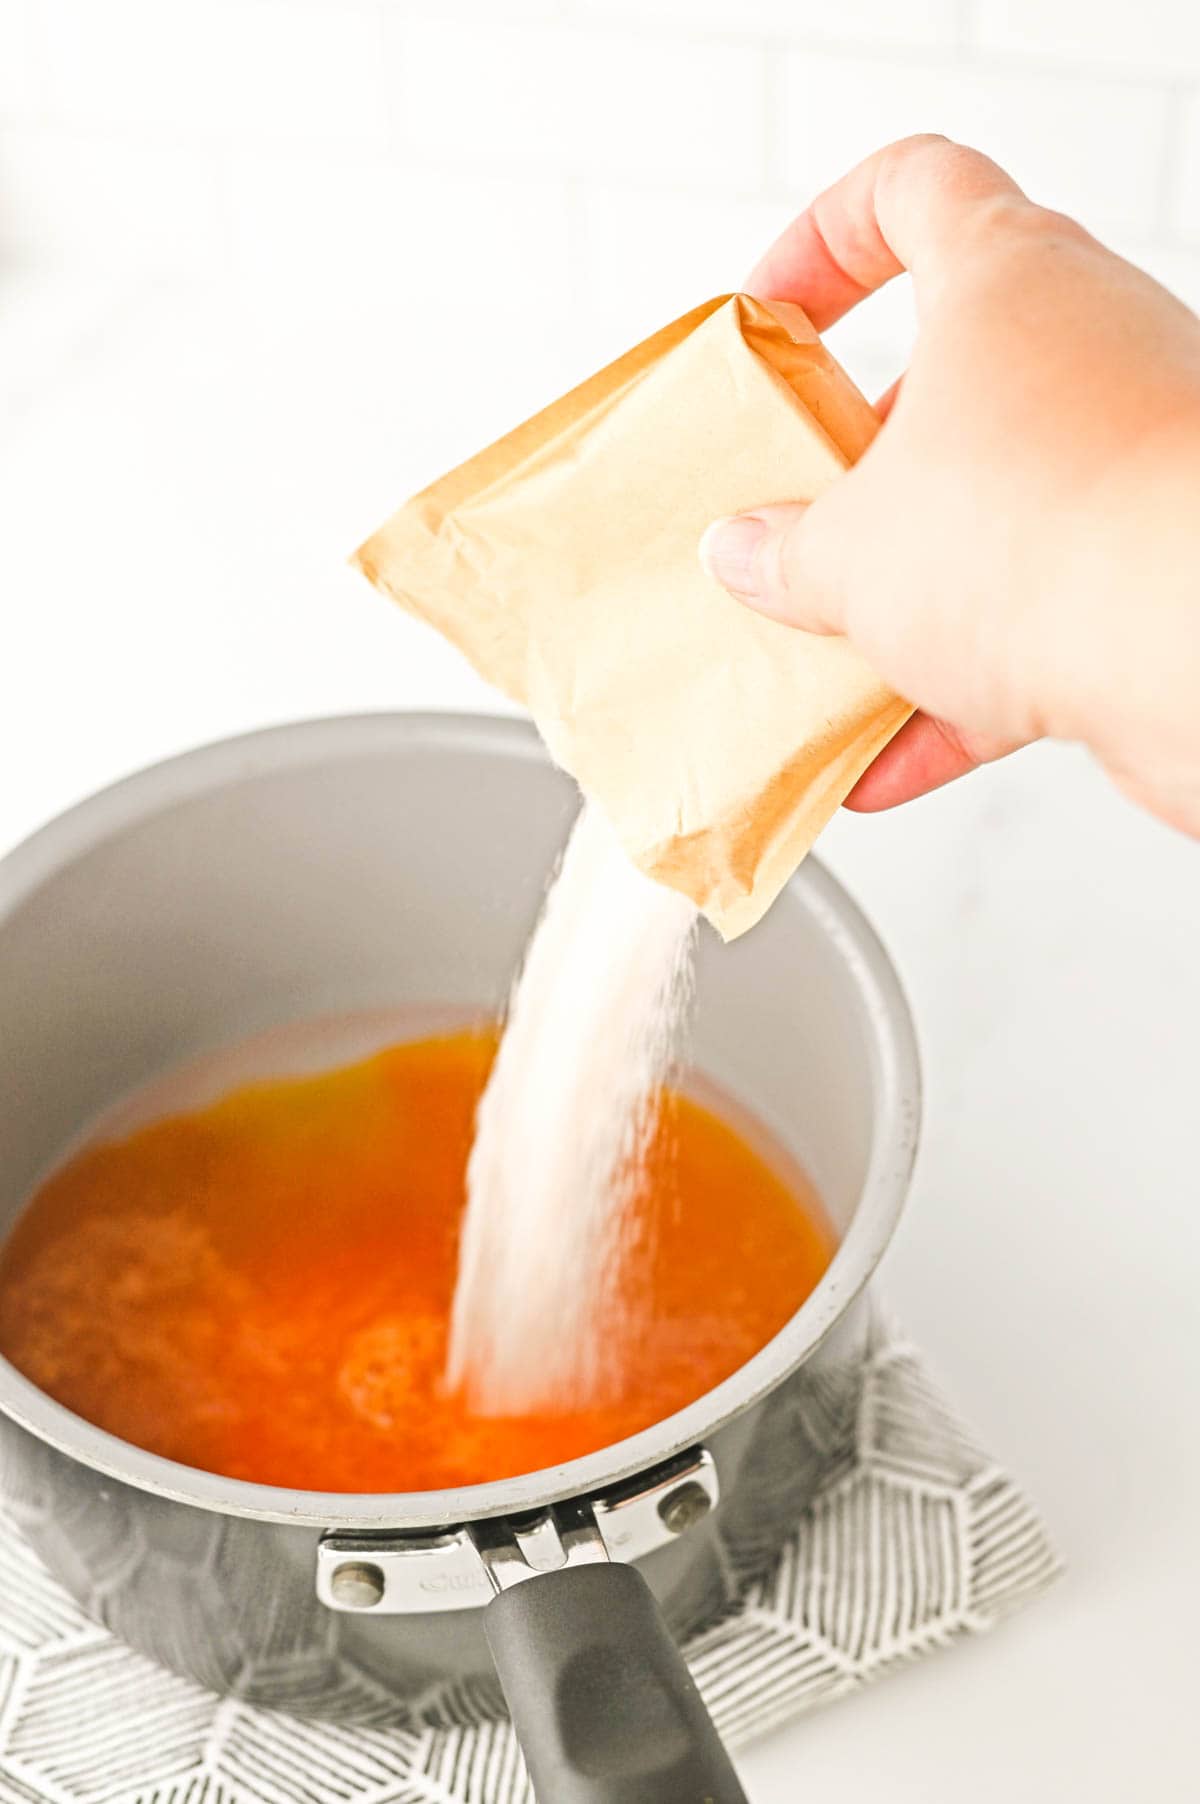 Orange jello being poured into a saucepan.